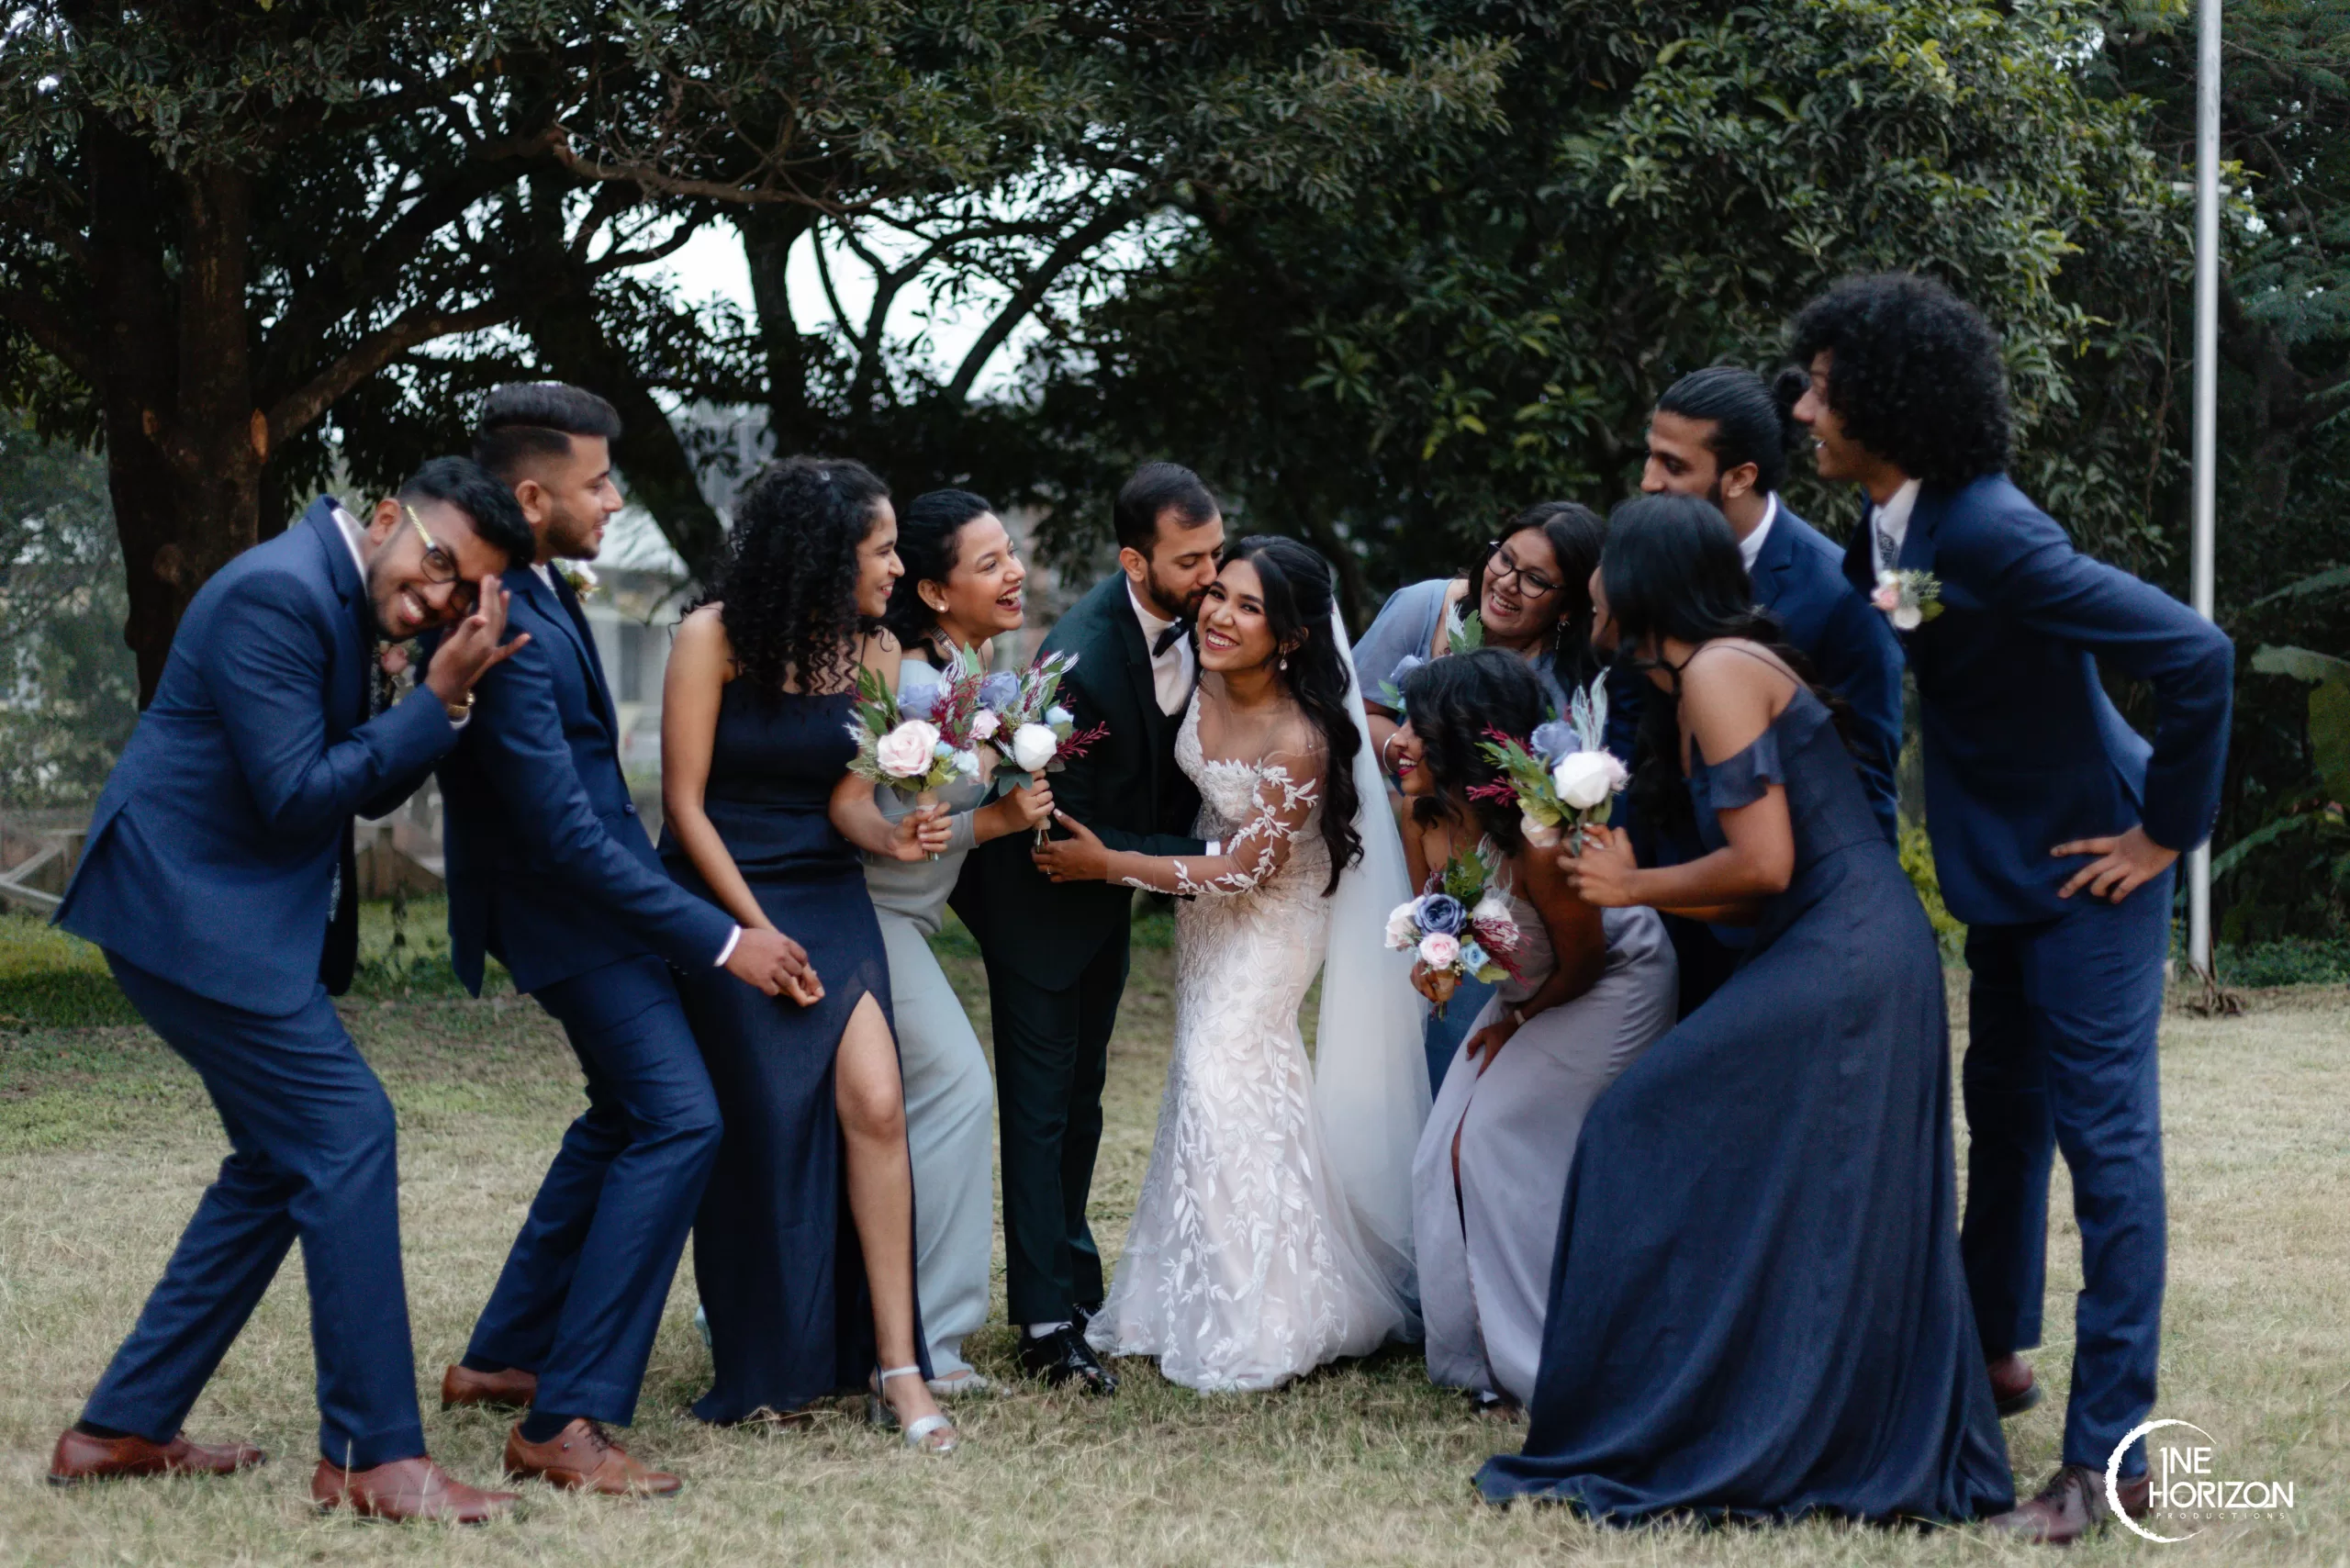 Tips for posing bridesmaids on a wedding day - wedding photoshoot ideas -  YouTube